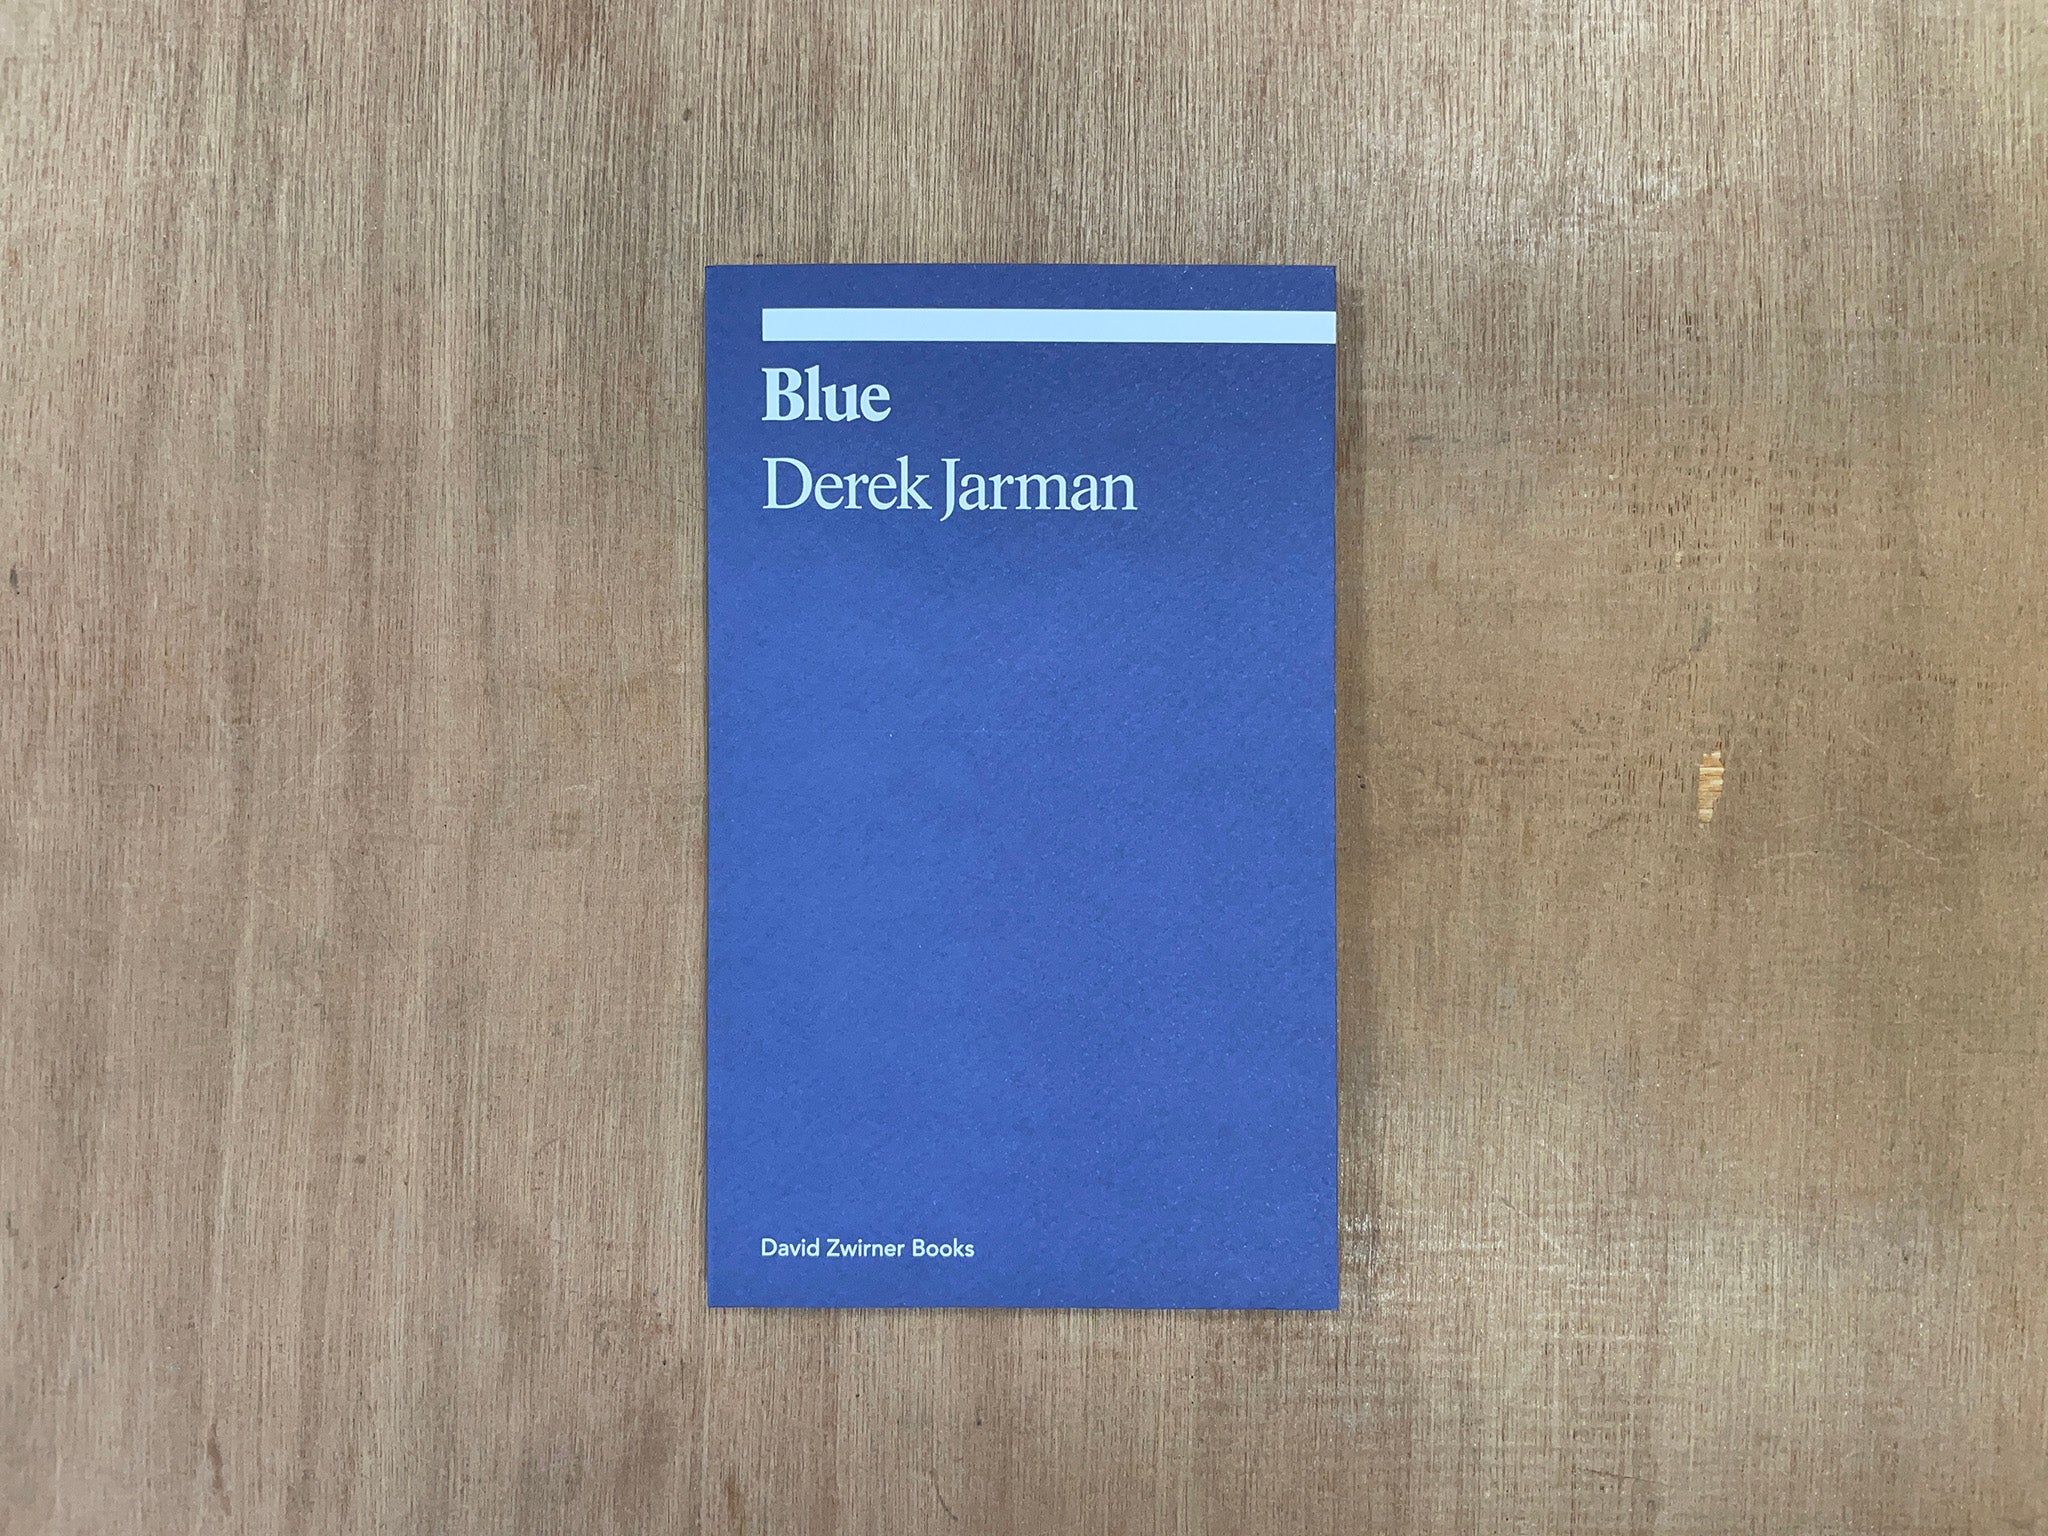 BLUE by Derek Jarman